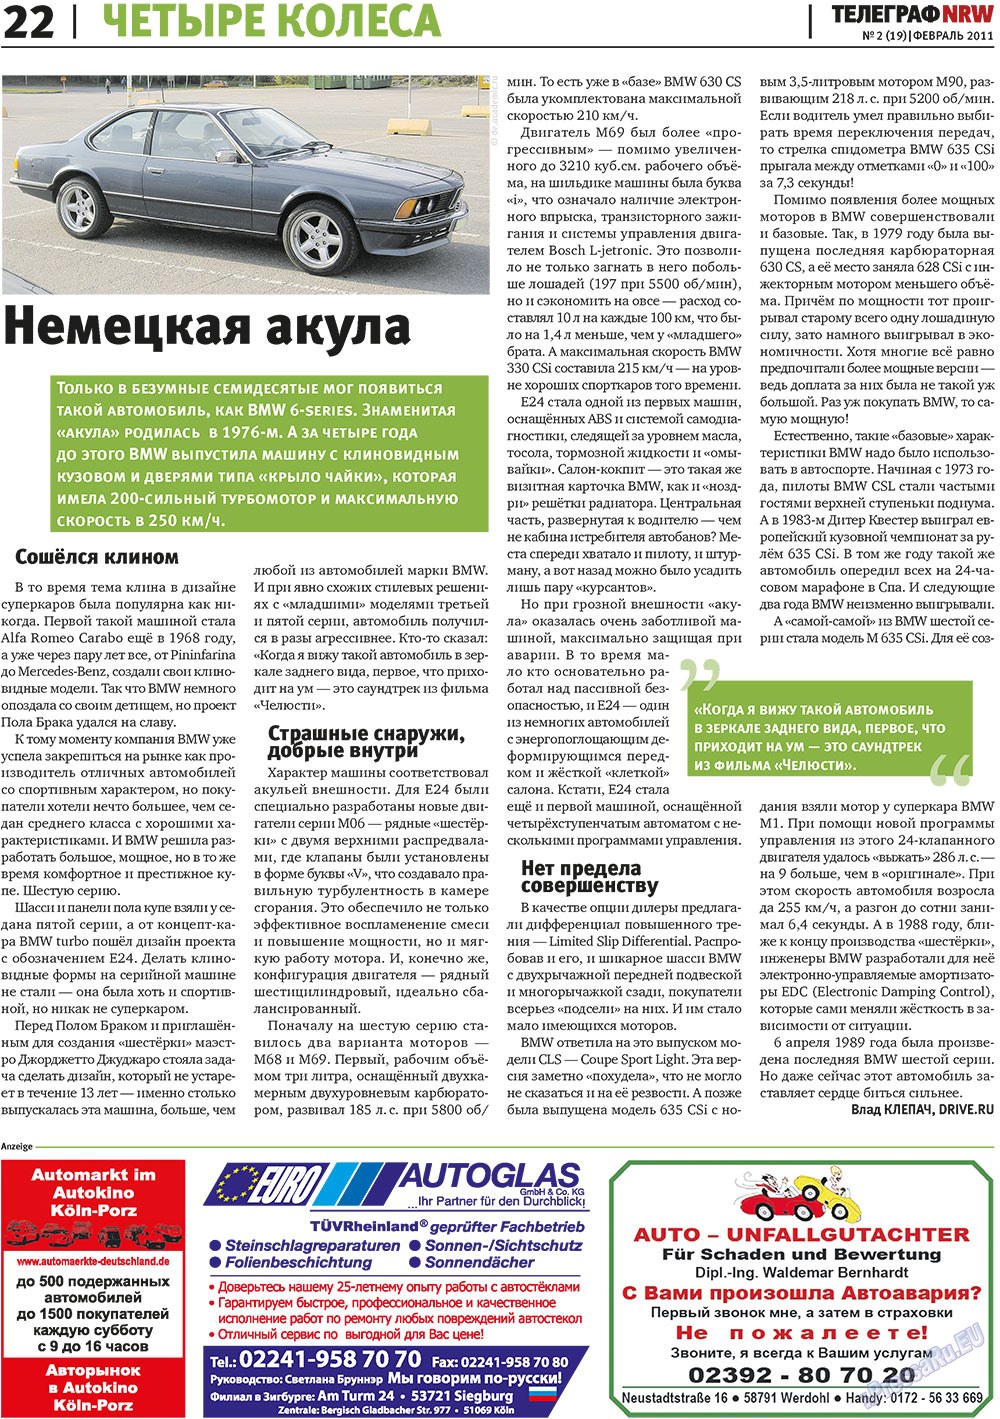 Телеграф NRW, газета. 2011 №2 стр.22